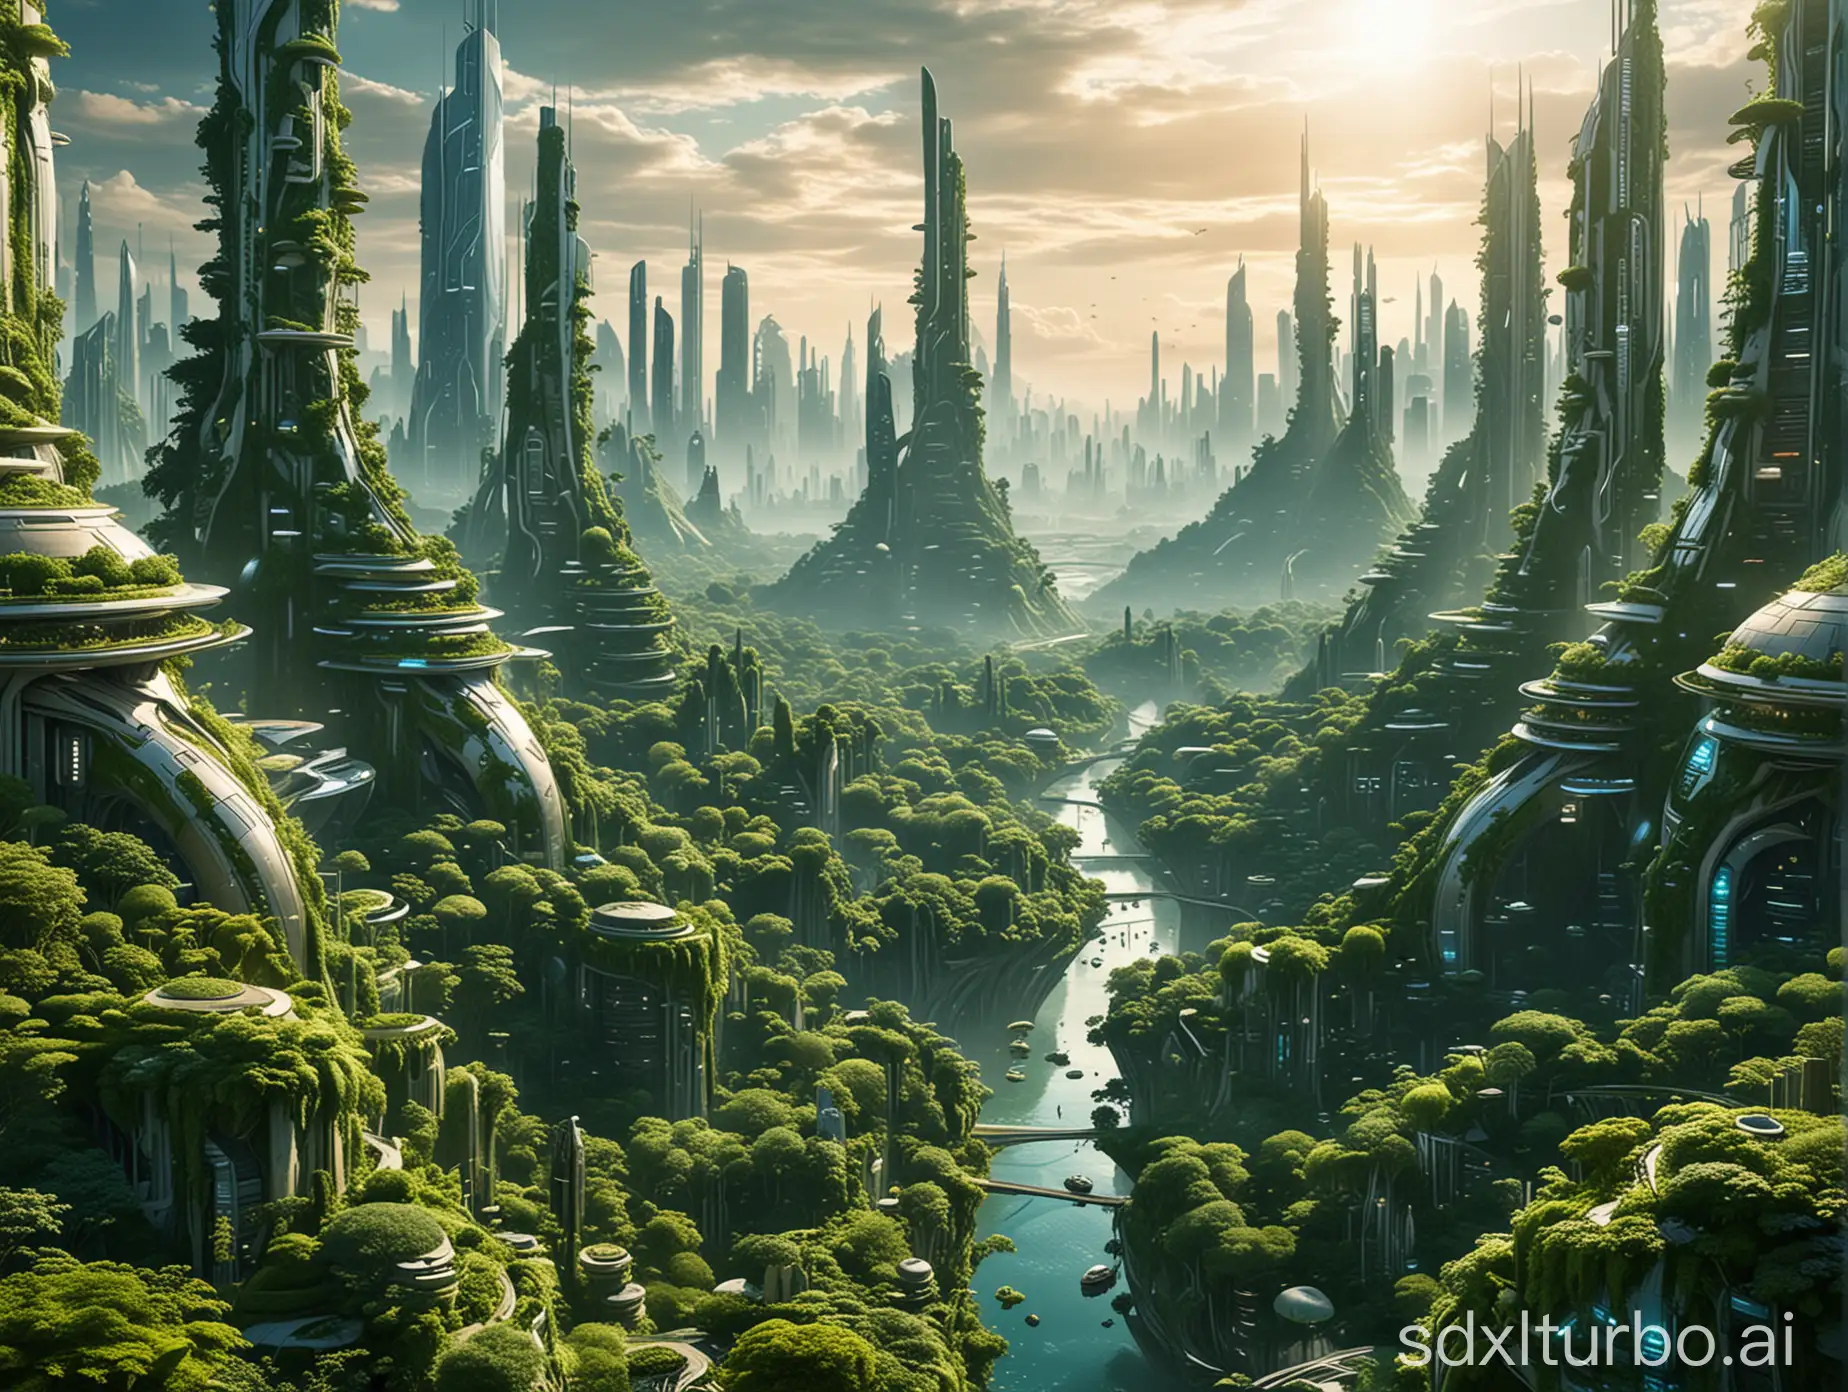 A futuristic city full of greenery.